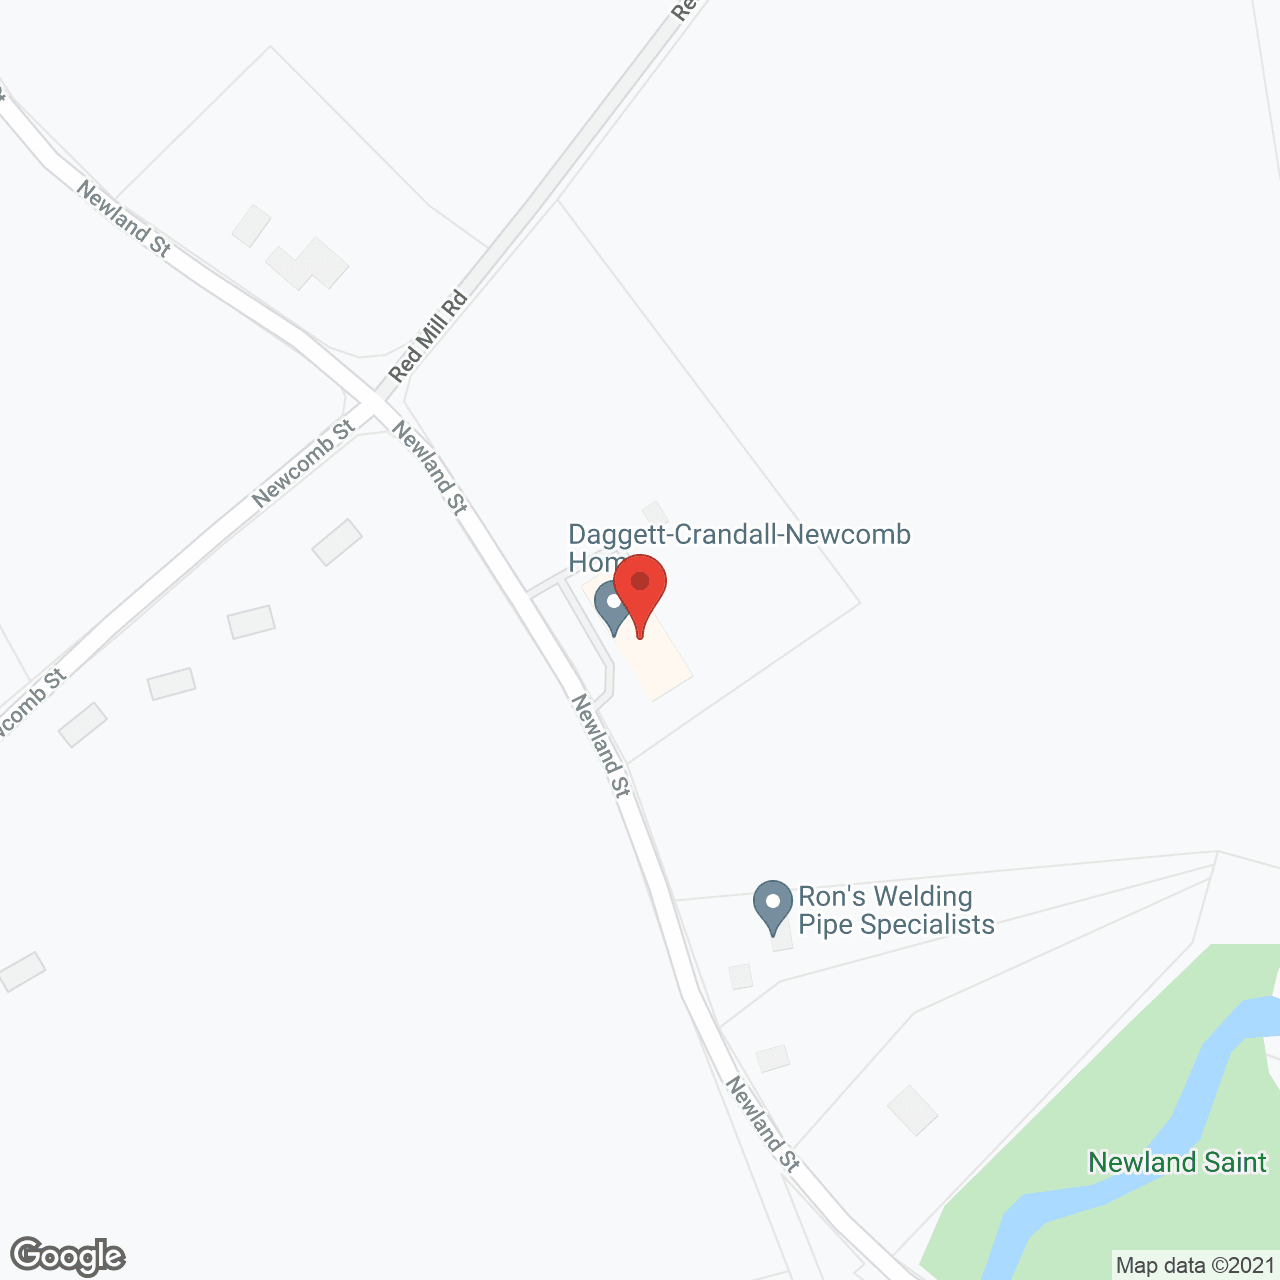 Daggett-Crandall-Newcomb Home in google map